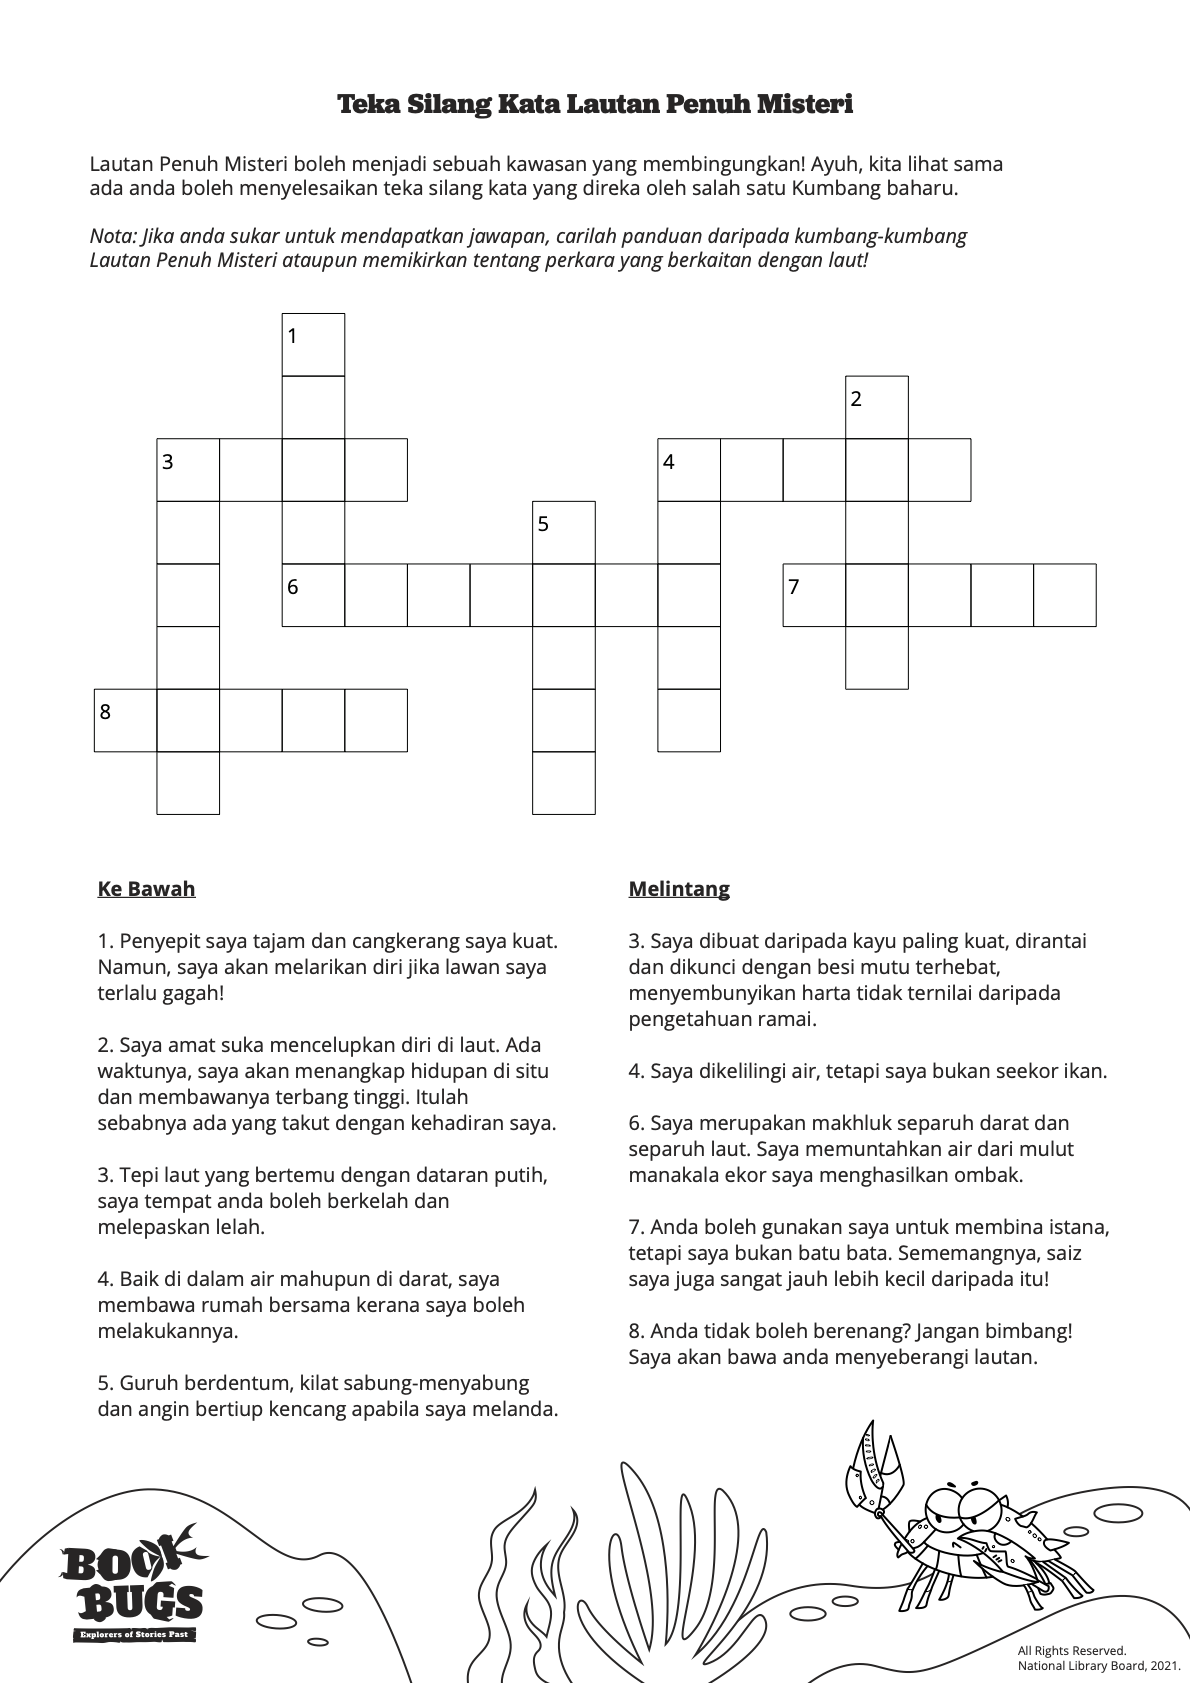 Malay-English Crossword